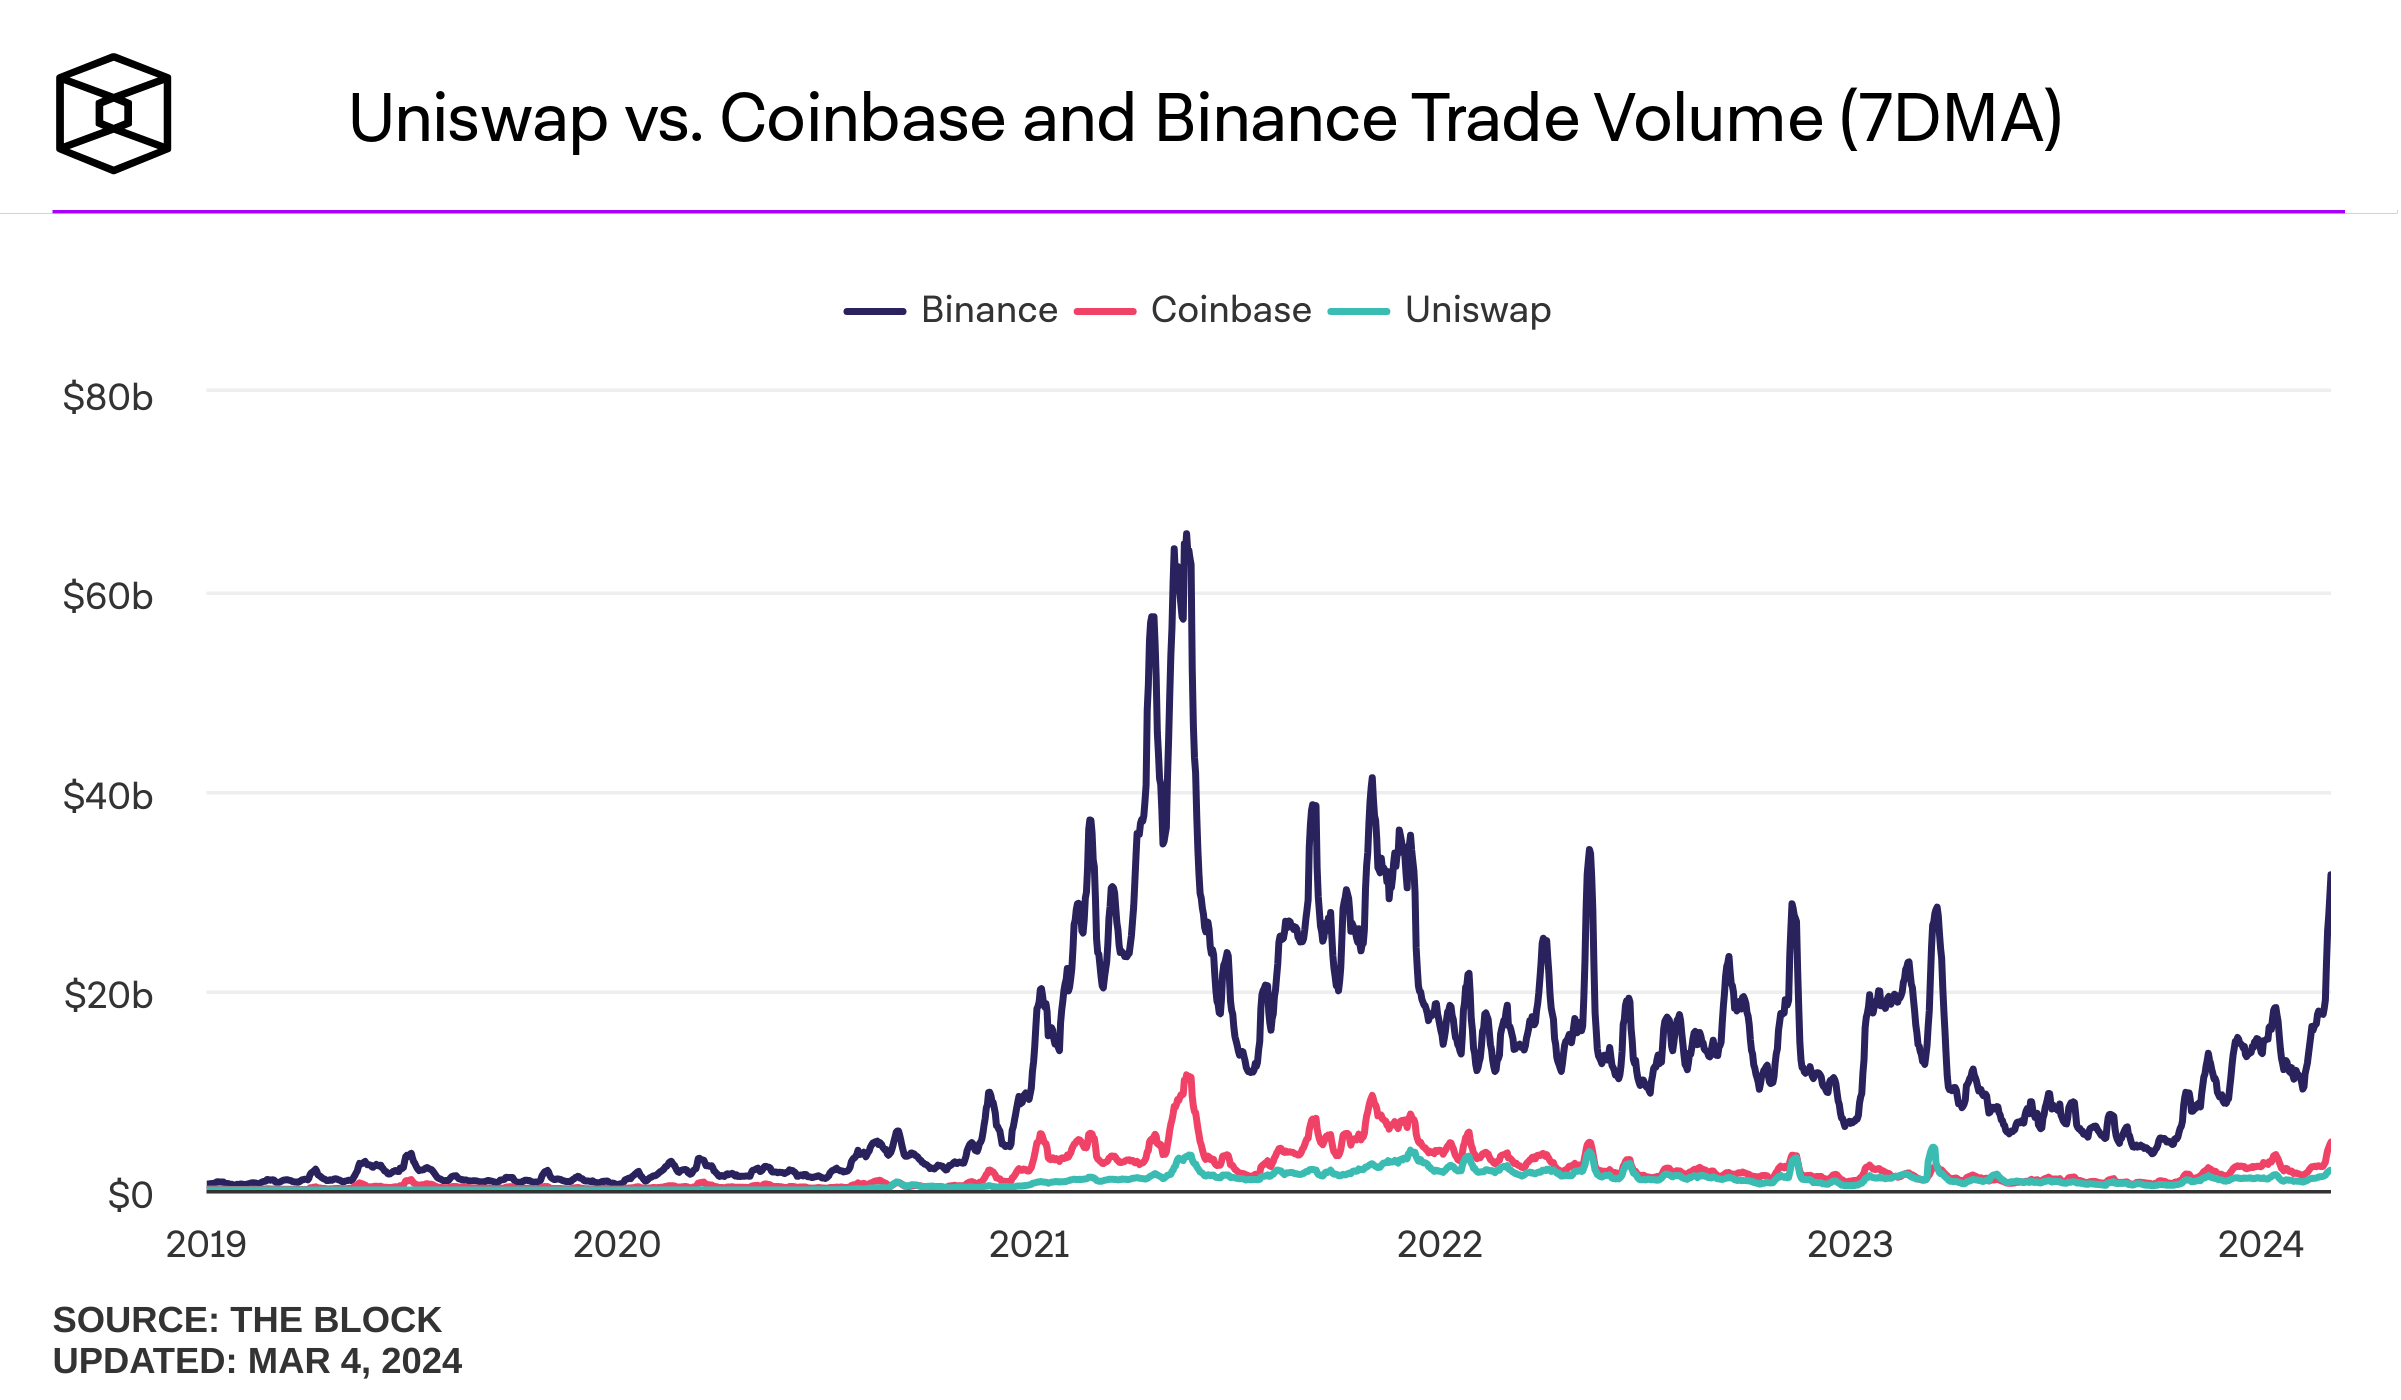 Объемы торгов на биржах Uniswap, Binance и Coinbase. Источник:&nbsp;The Block&nbsp;

